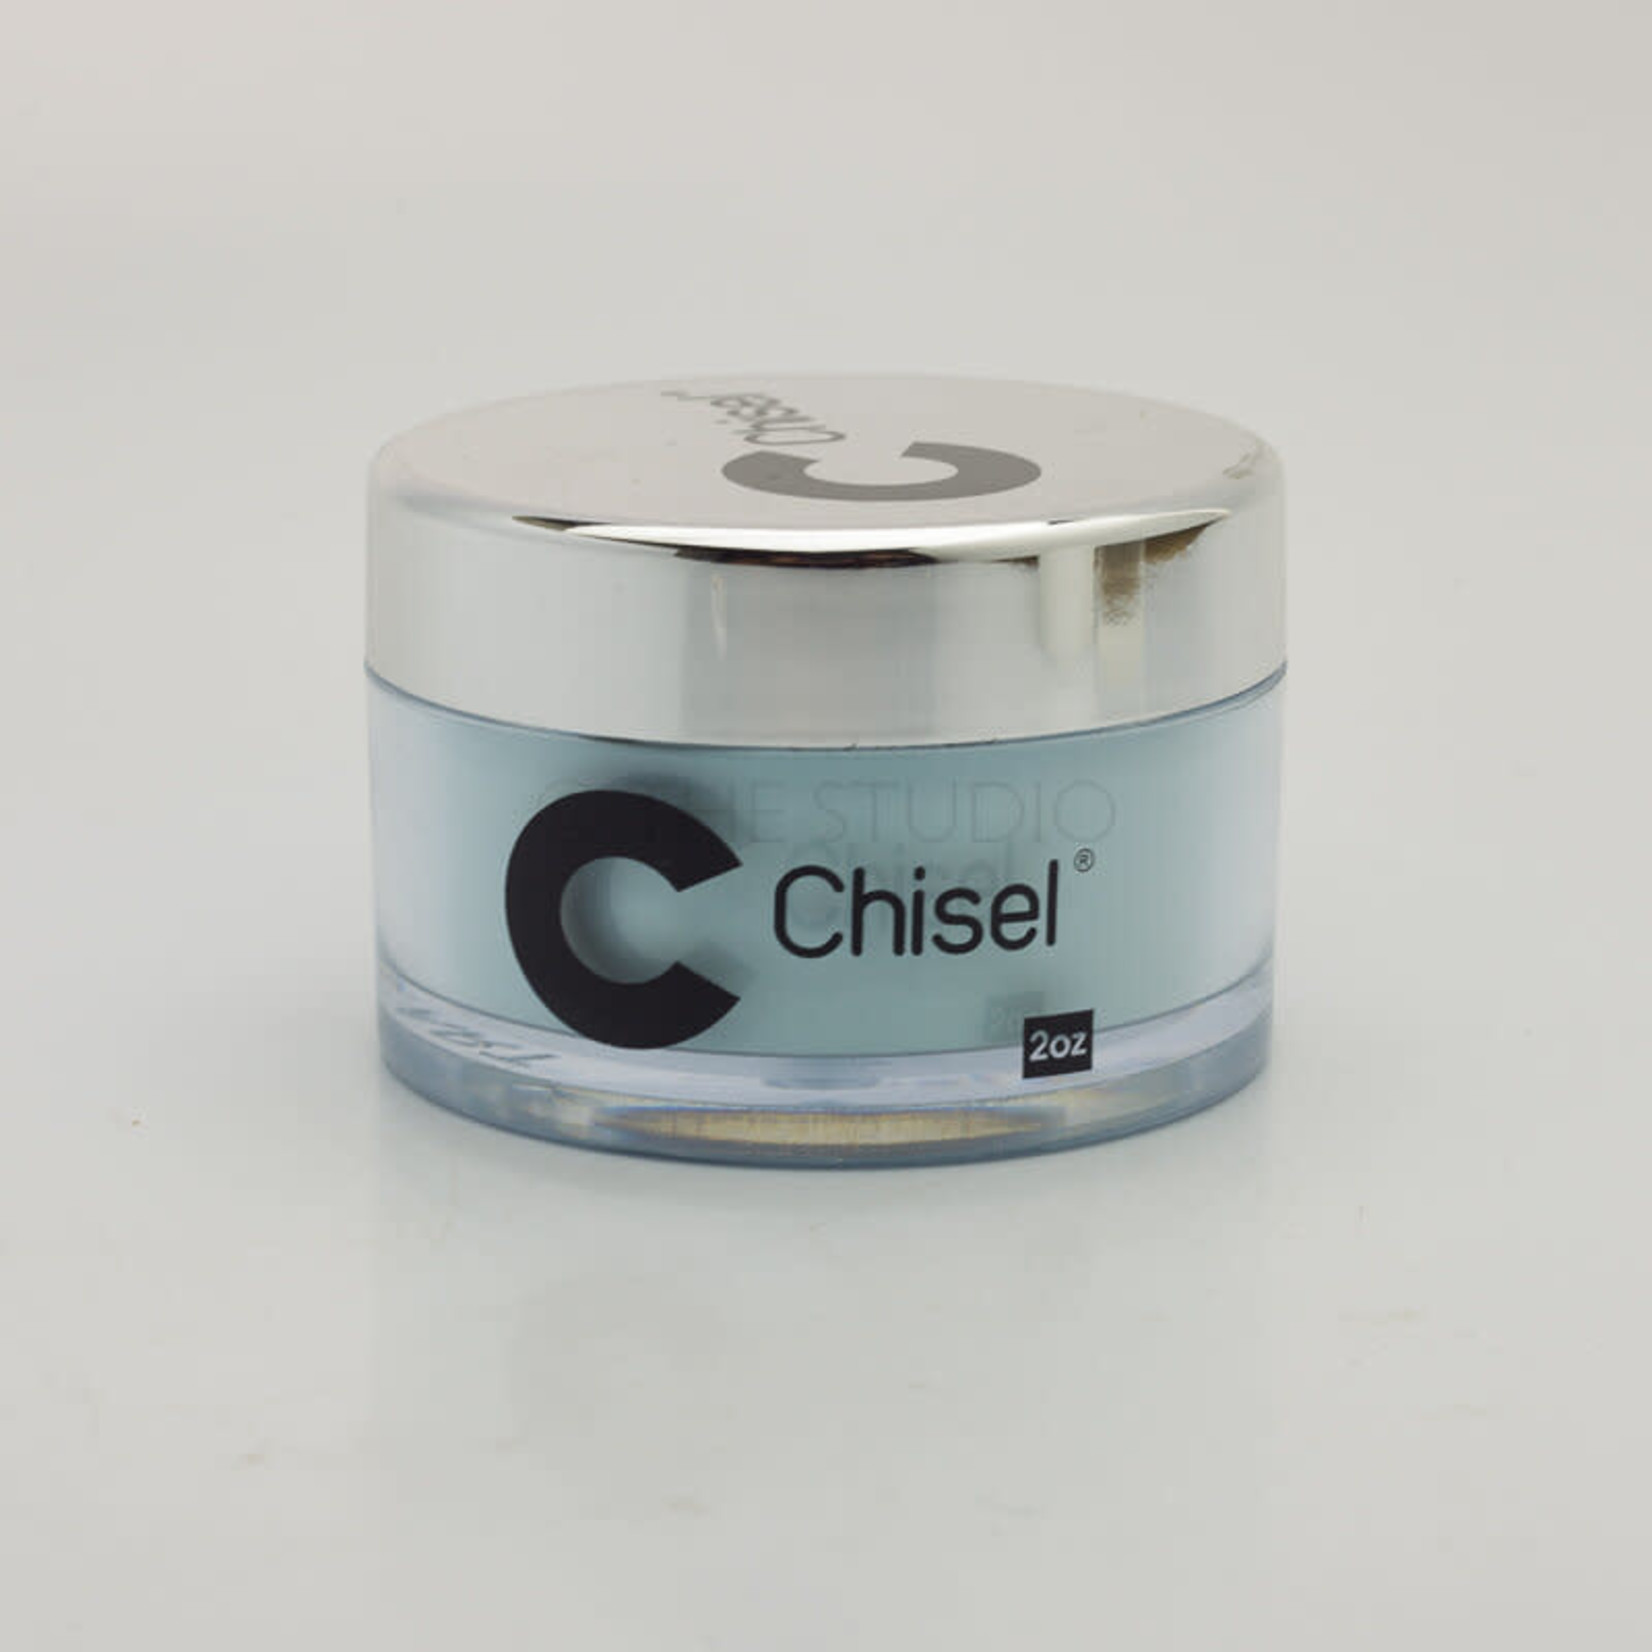 Chisel Chisel - Glow 01 - AIO Powder - 2 oz